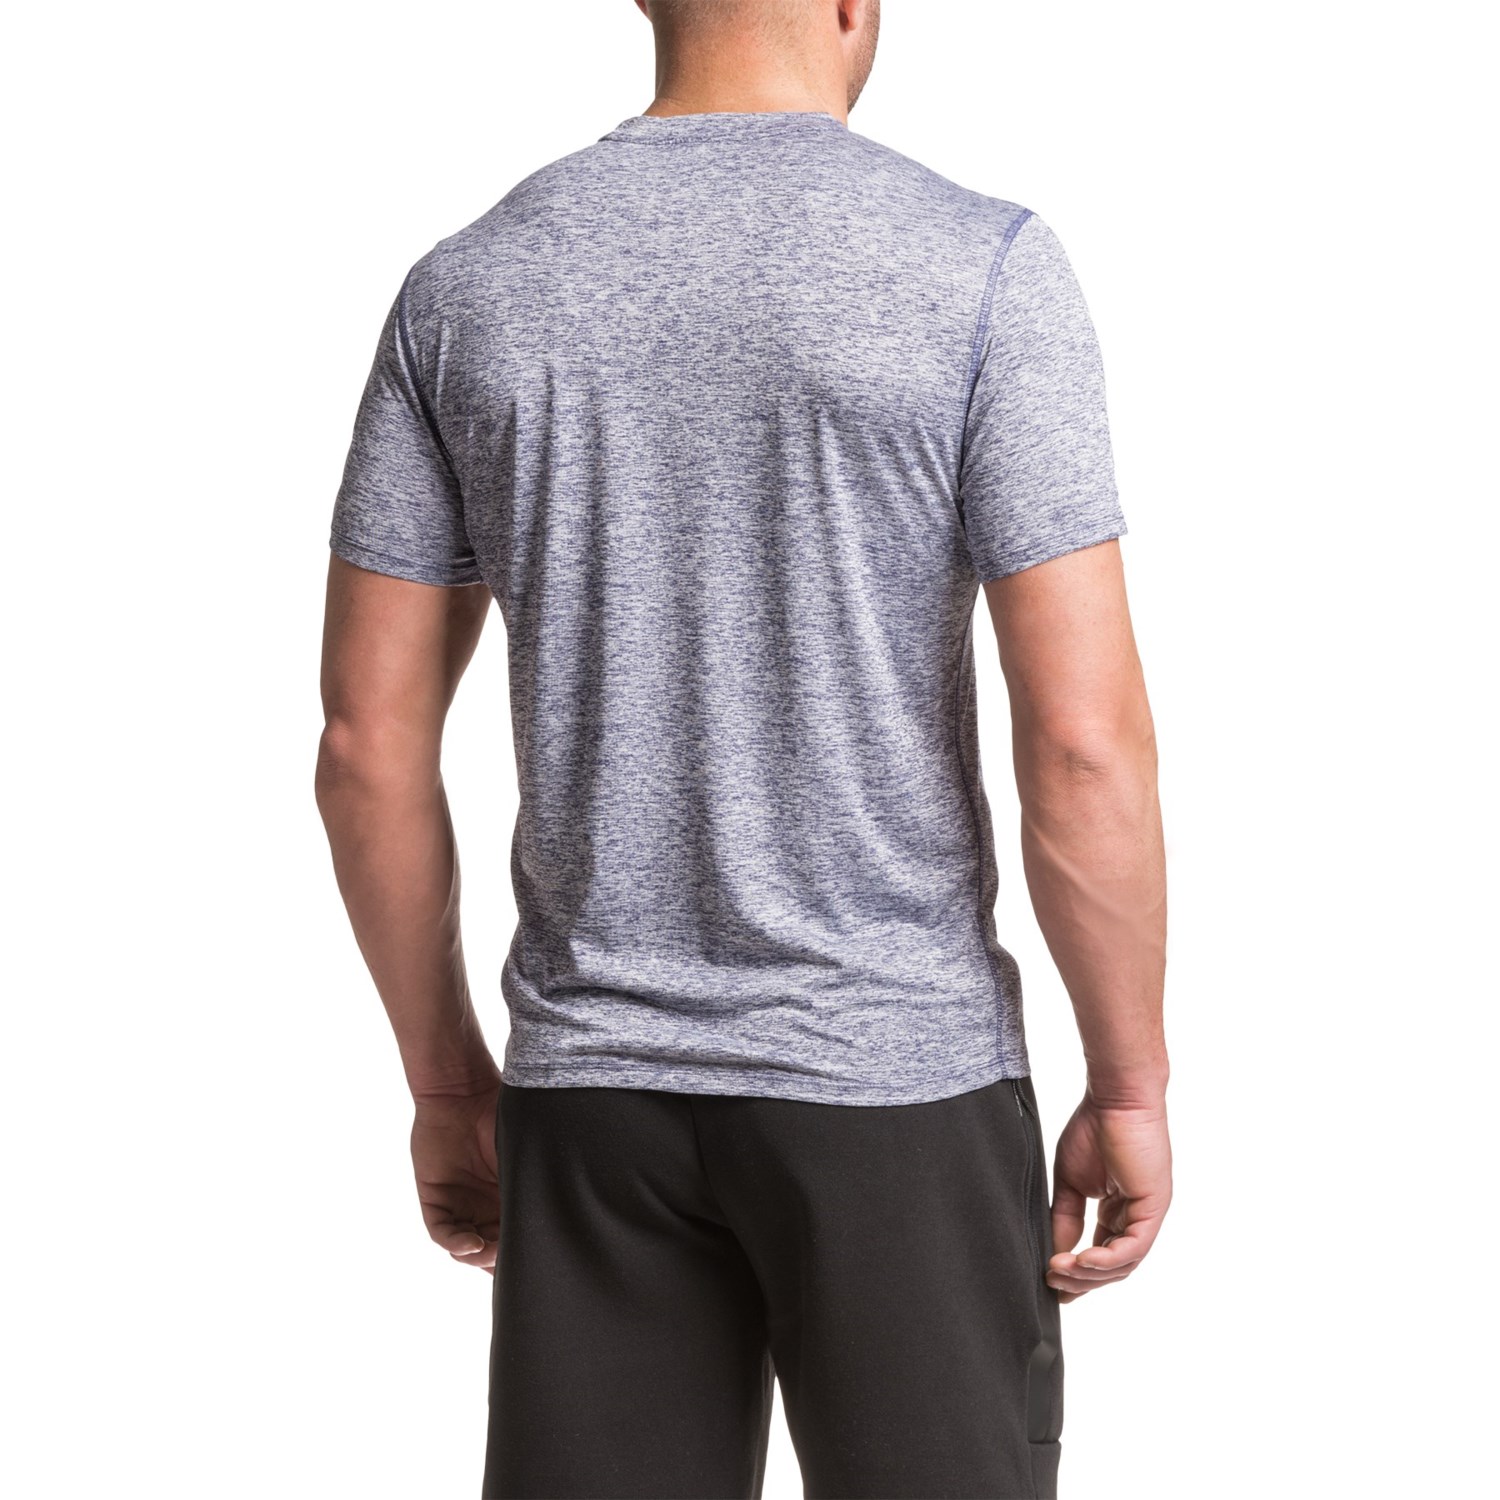 RBX XTrain High-Performance Shirt (For Men) - Save 72%